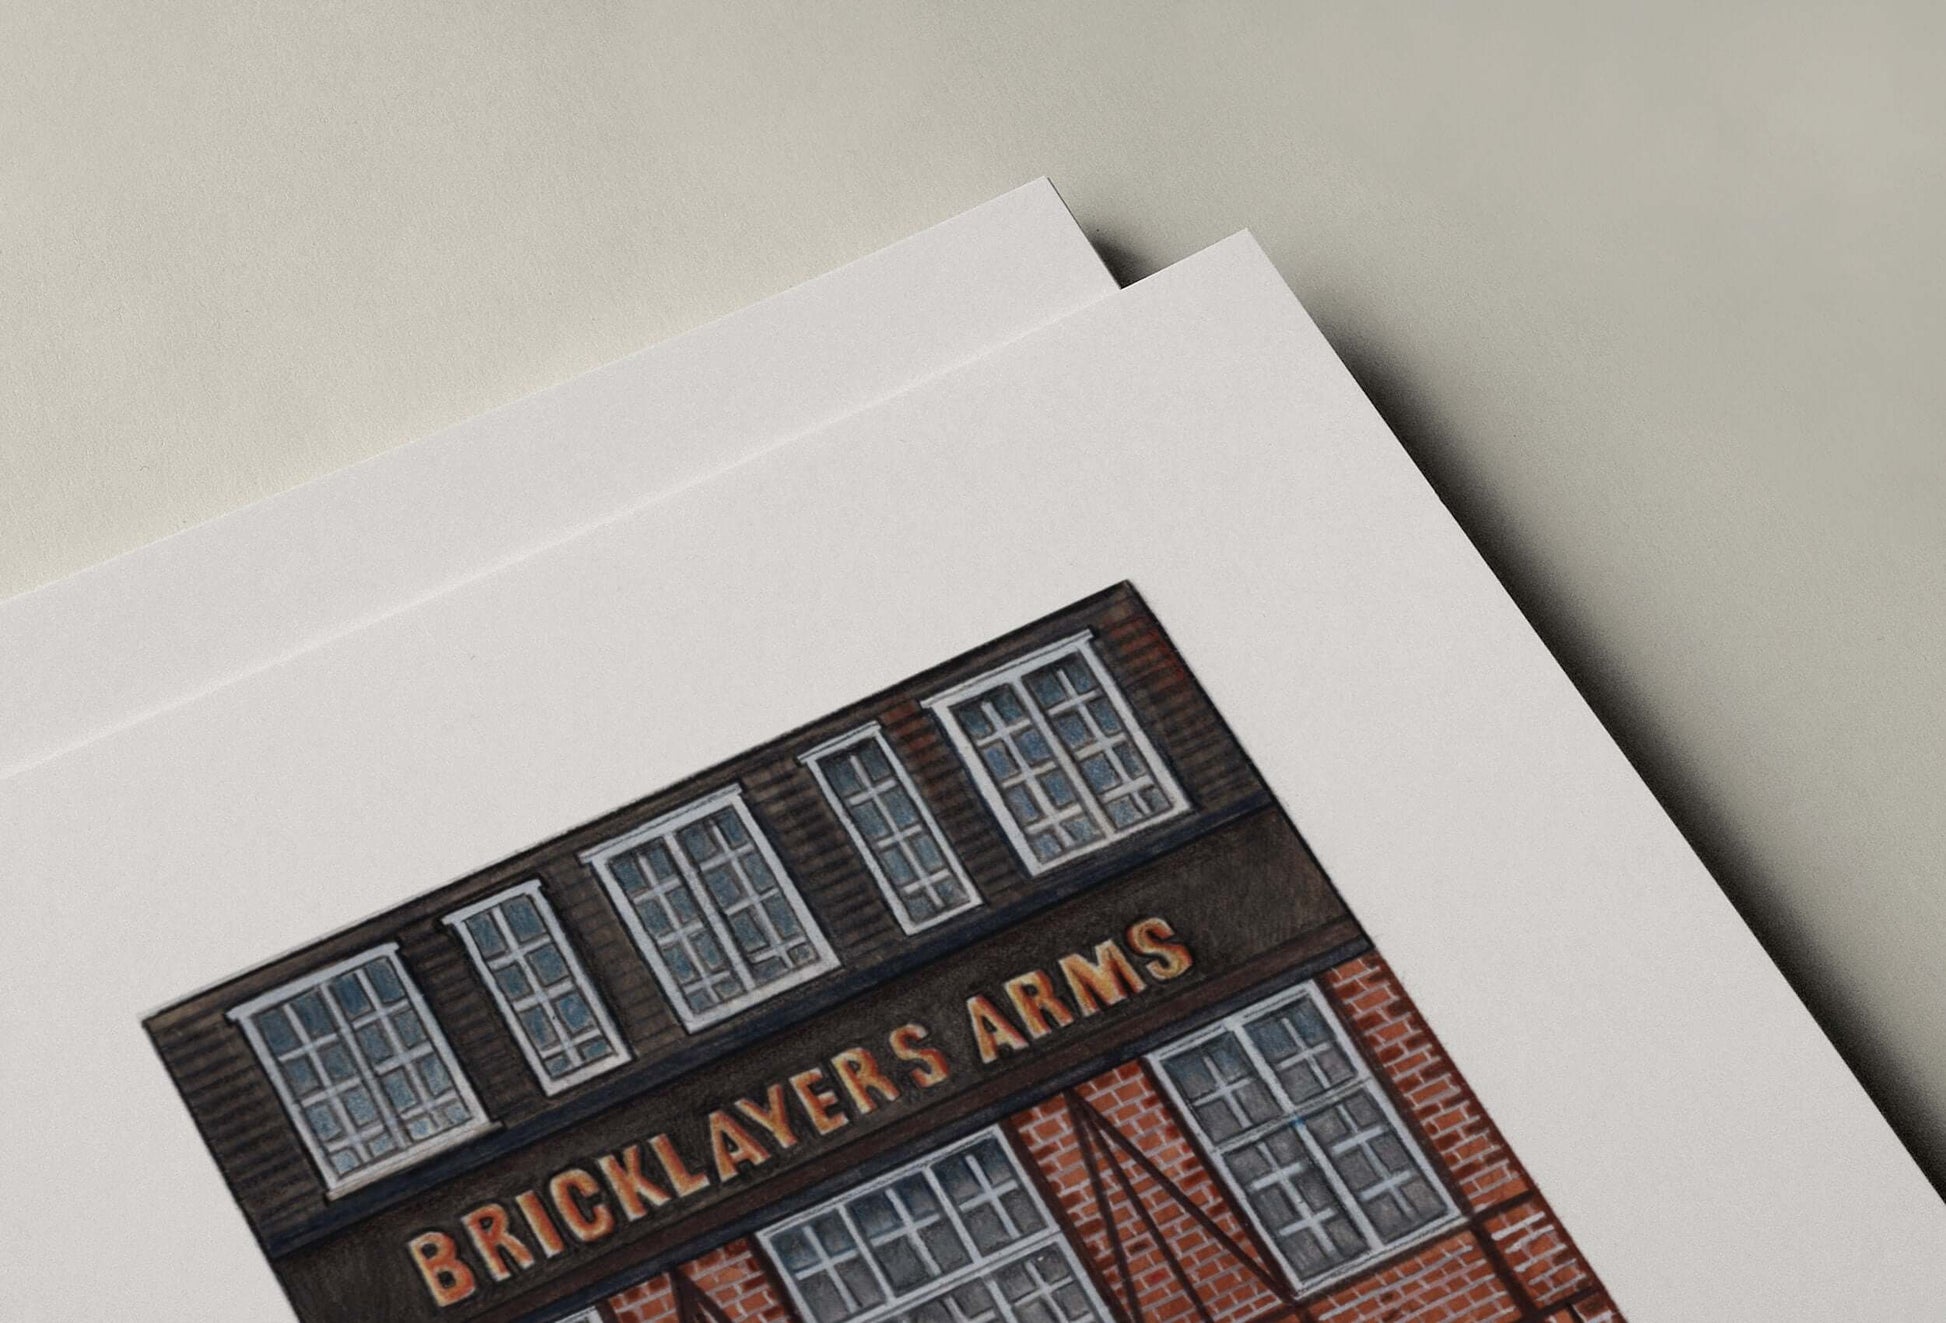 Bricklayers Arms Pub Art Print, Tottenham Court Road London